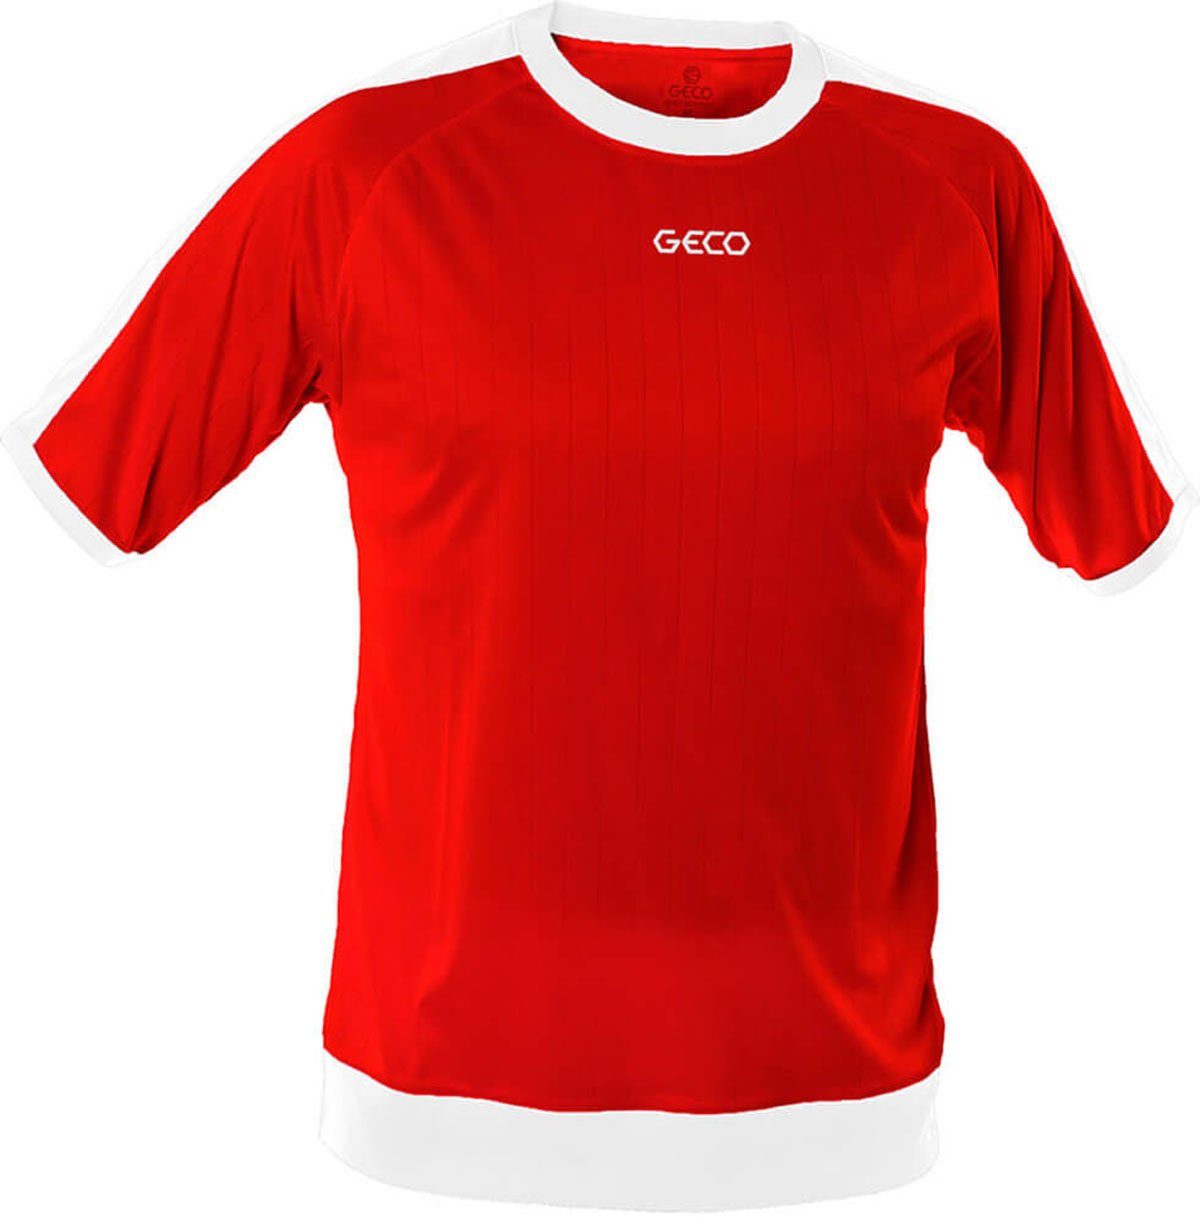 kurzarm NOTOS Fußballtrikot Geco Geco zweifarbig rot/weiß Trikot Sportswear Fußball